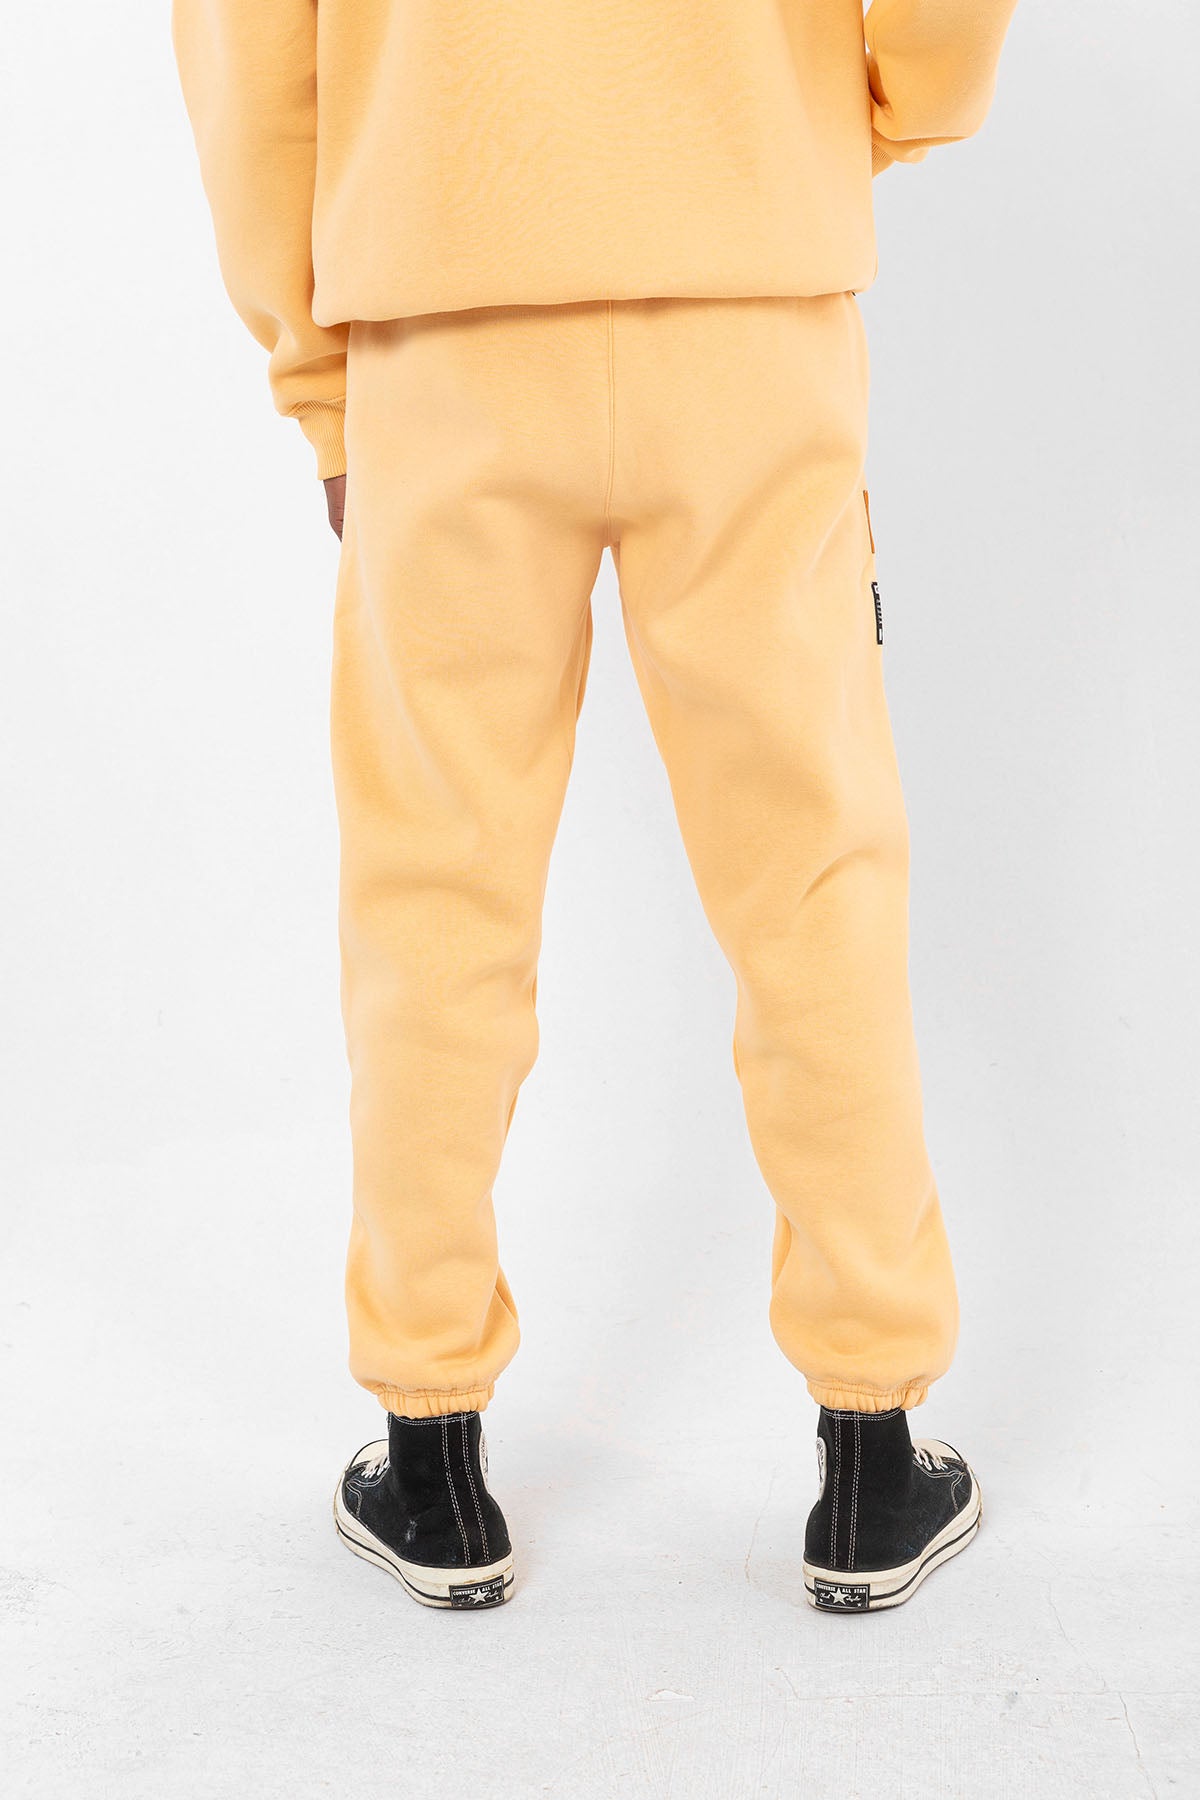 Winter Sweatpants Pastel Orange